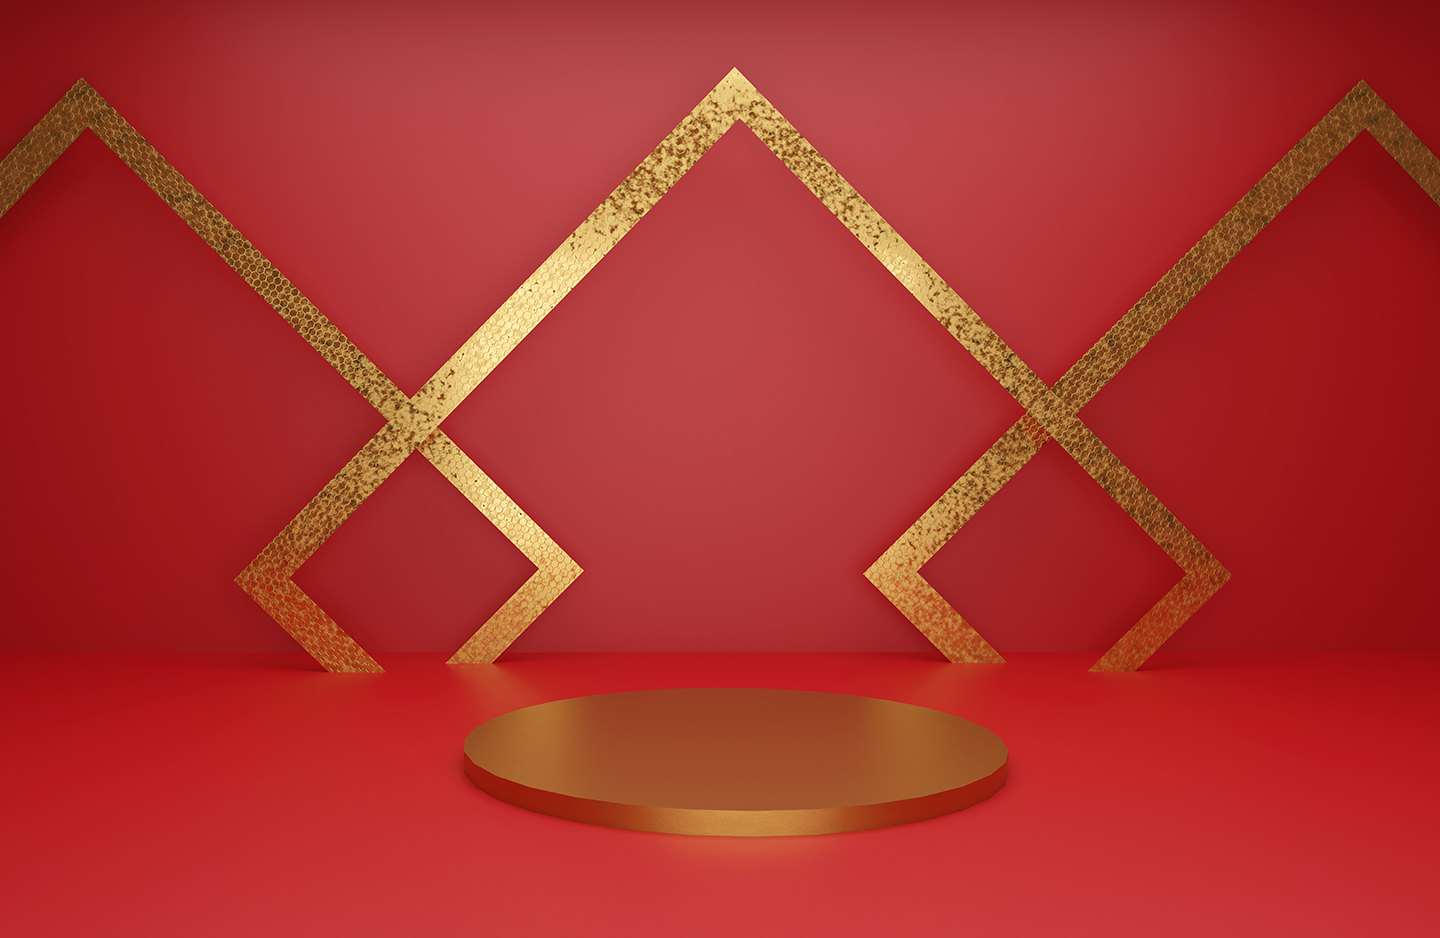 14 Product Display Podium Backgrounds, golden podium on red background.